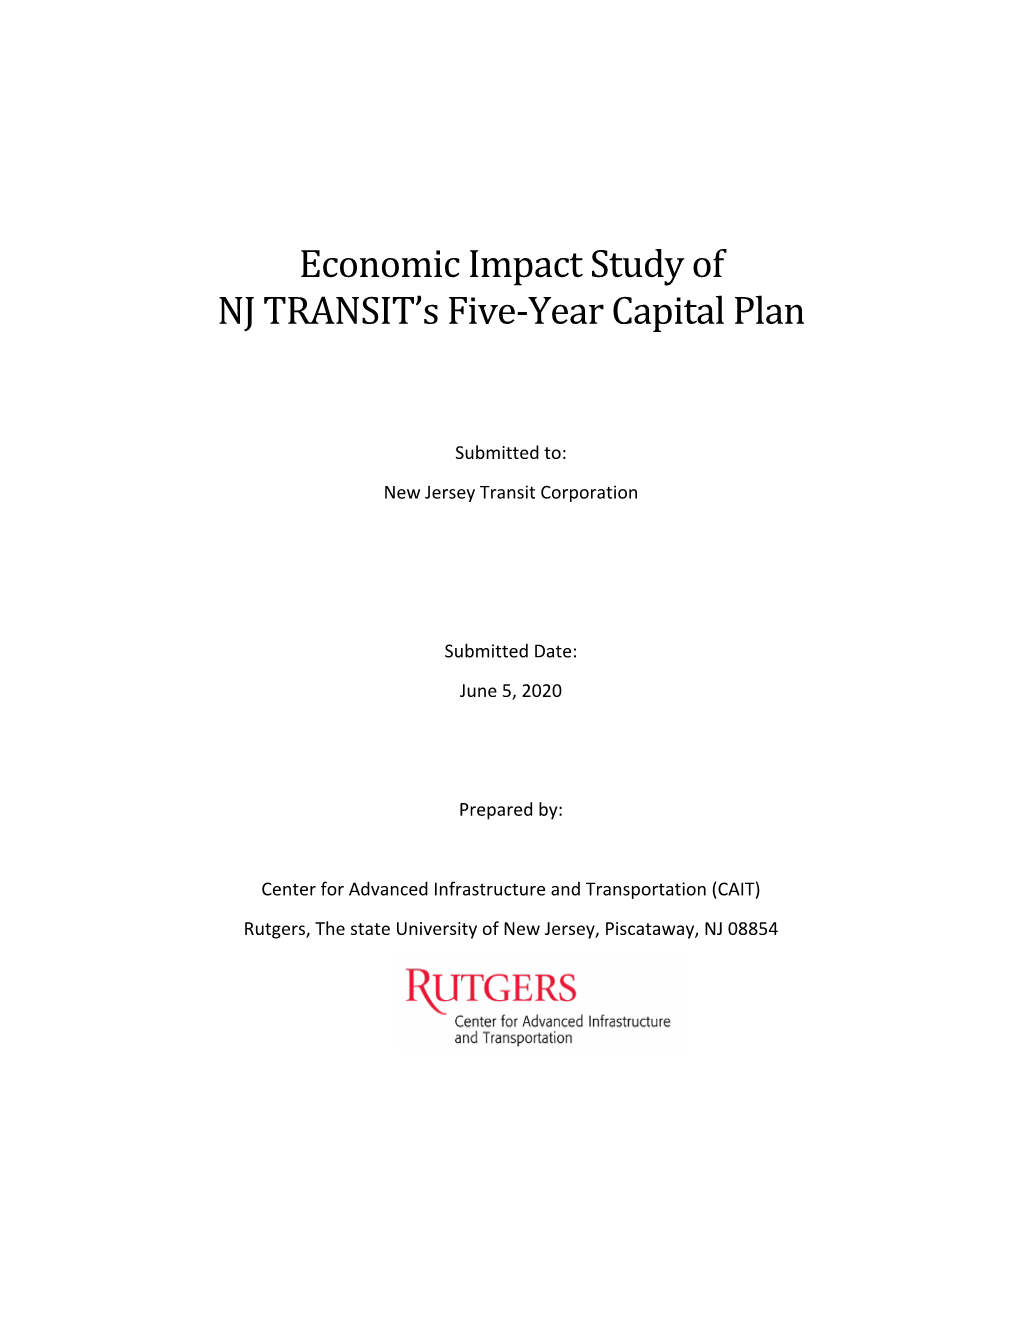 Economic Impact Study of NJ TRANSIT's Five-Year Capital Plan